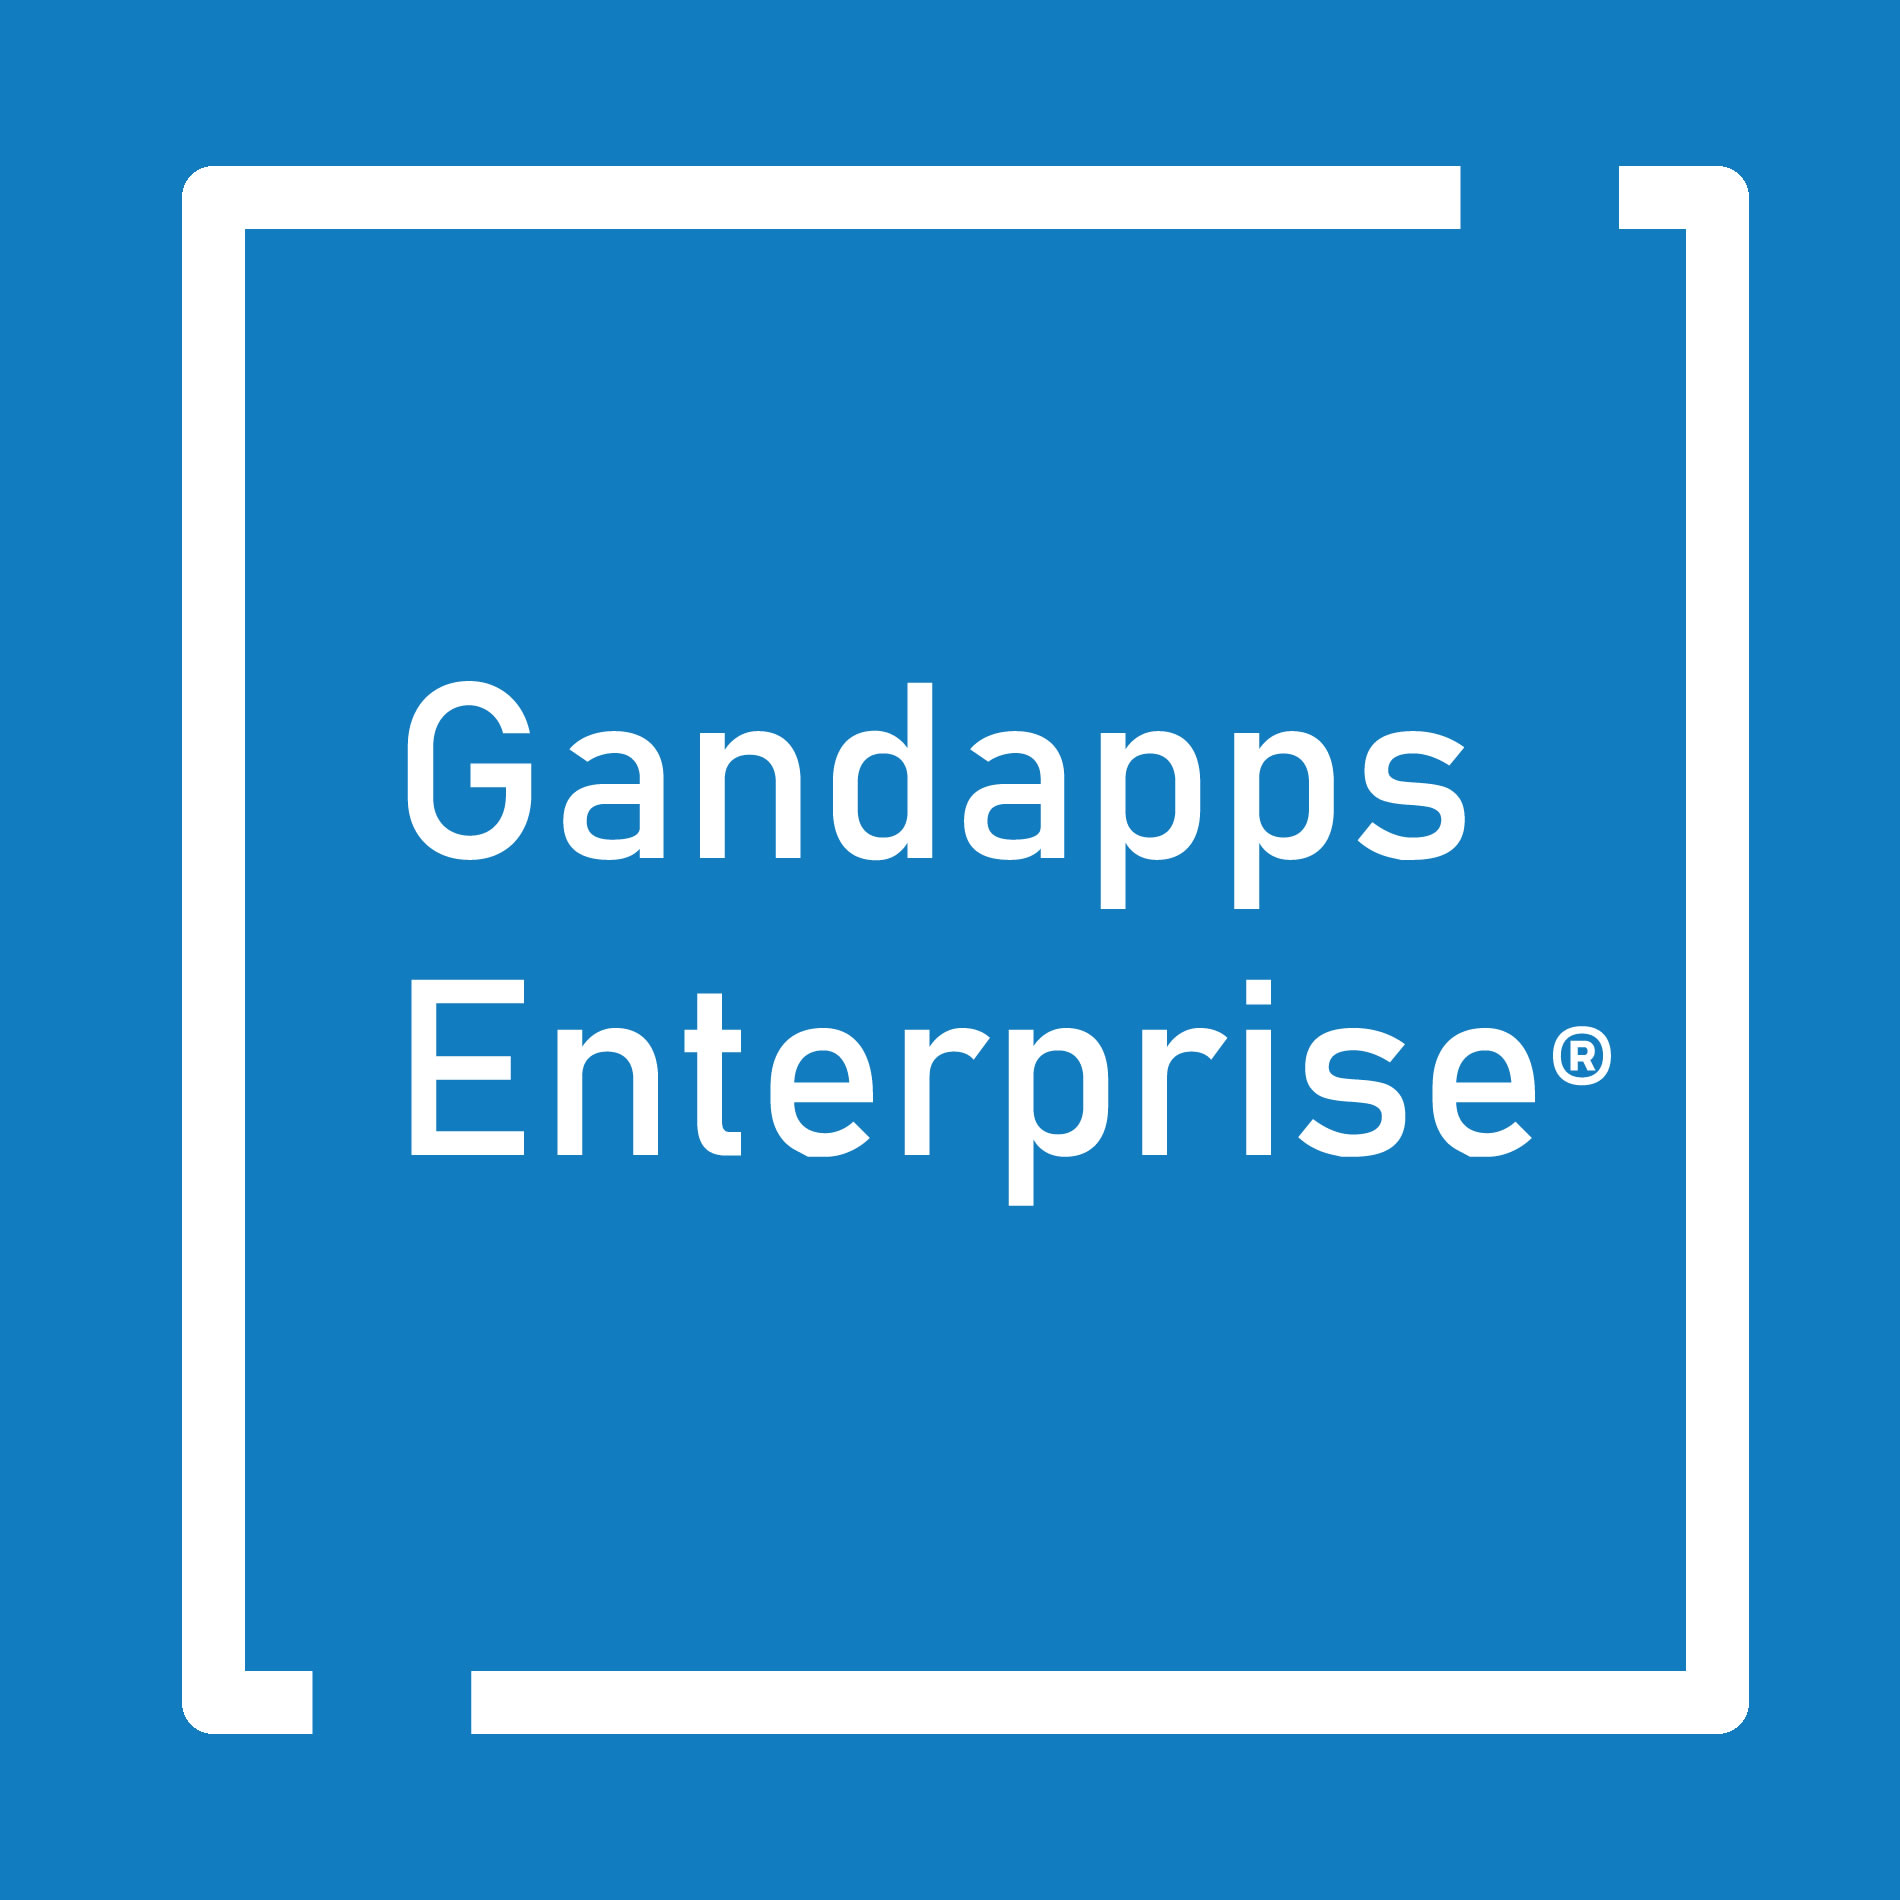 Gandapps enterprise